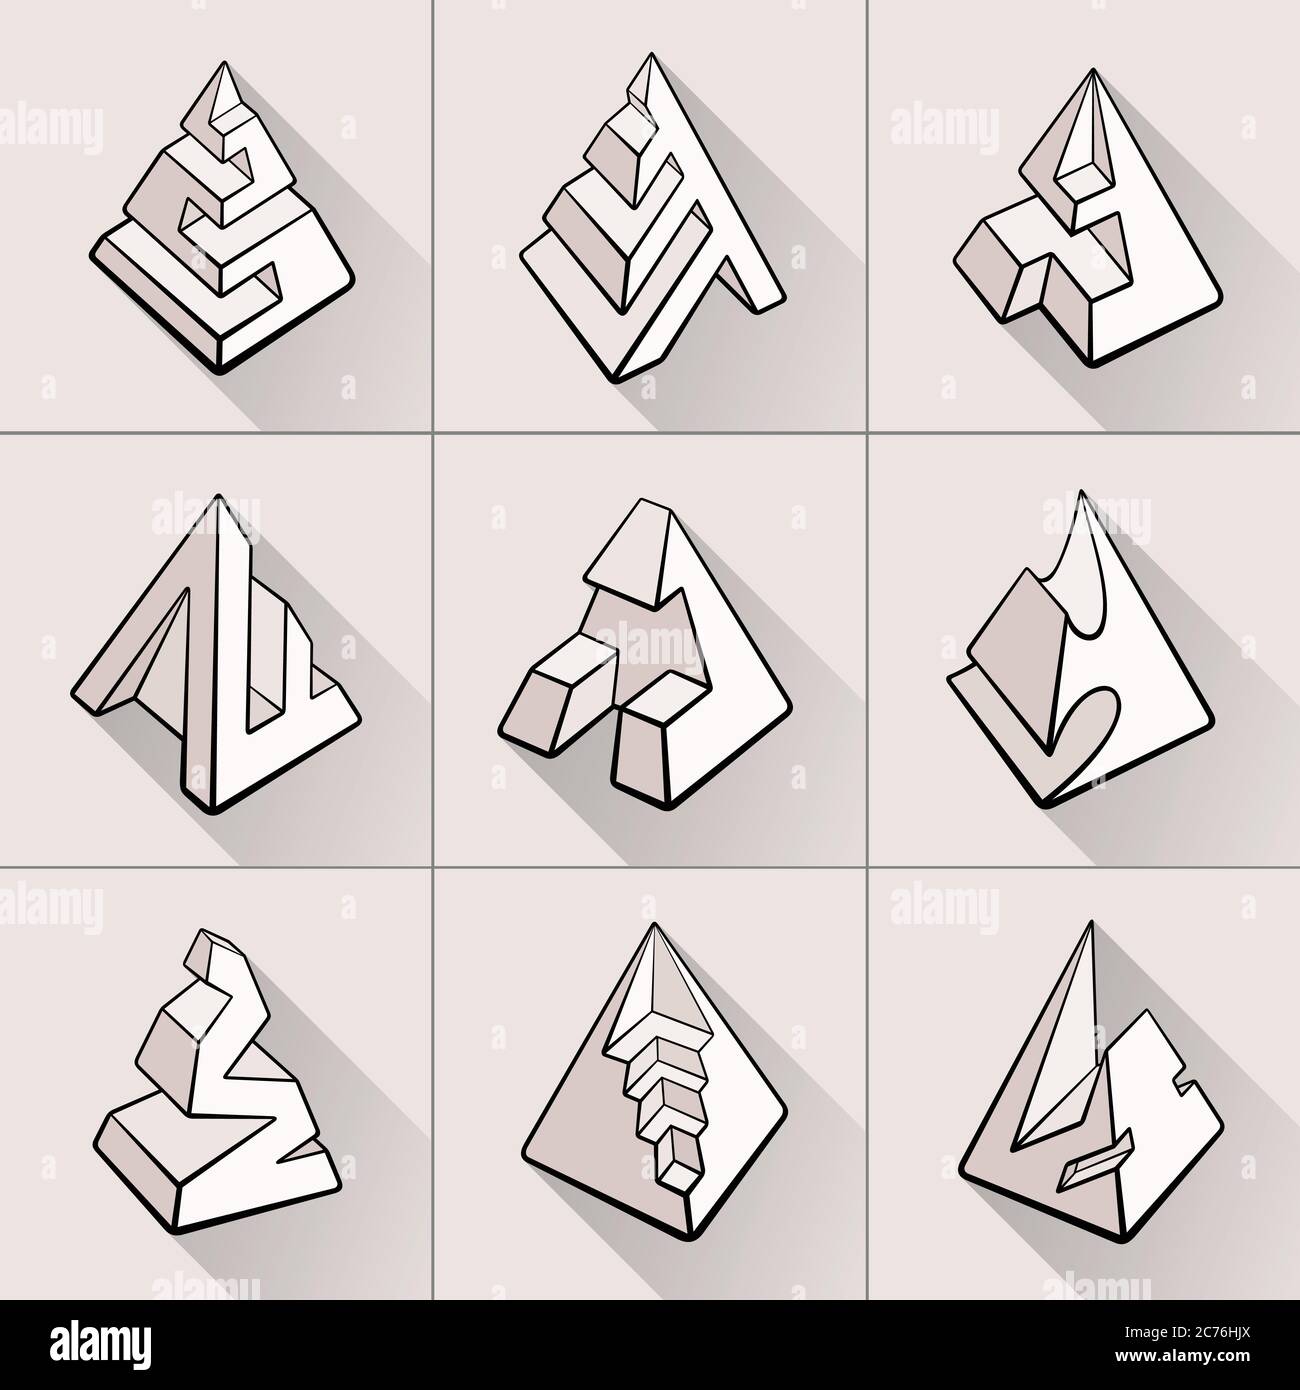 Set of geometric shapes pyramid designs Stock Image & - Alamy